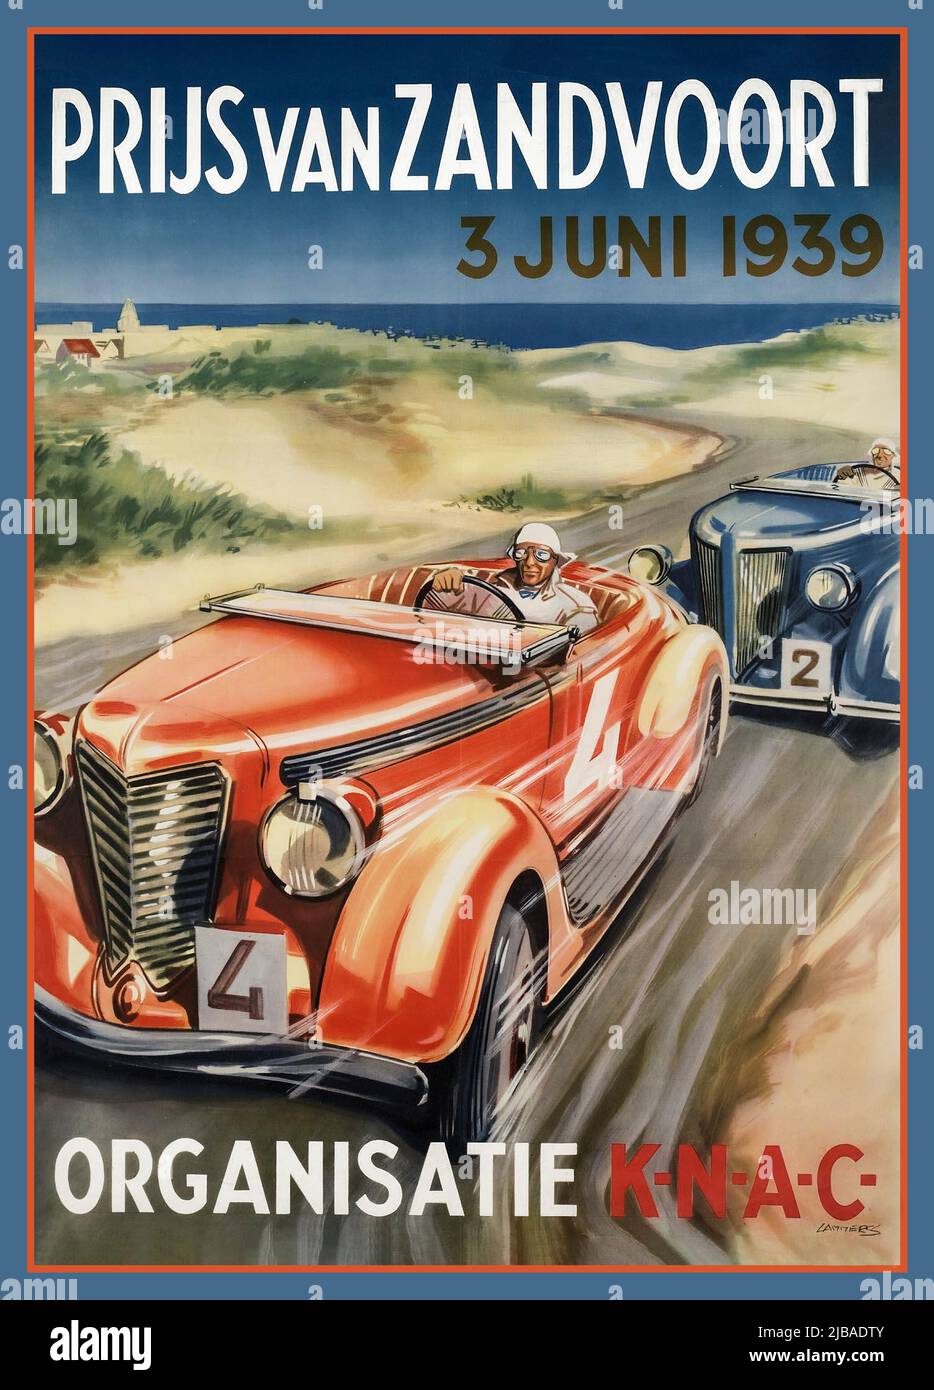 Vintage 1939 Motor Rally at Zandvoort Organisation KNAC  Dutch Holland Poster by H. Lammers - Prijs van Zandvoort K.N.A.C. Stock Photo